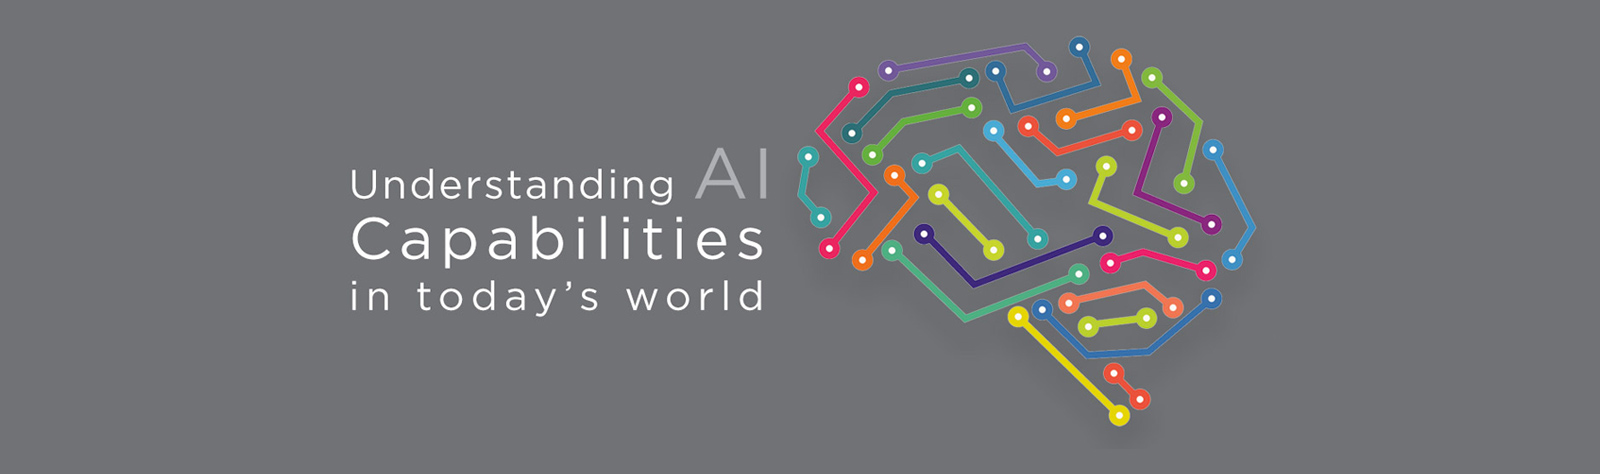 Understanding AI Capabilities in today’s world